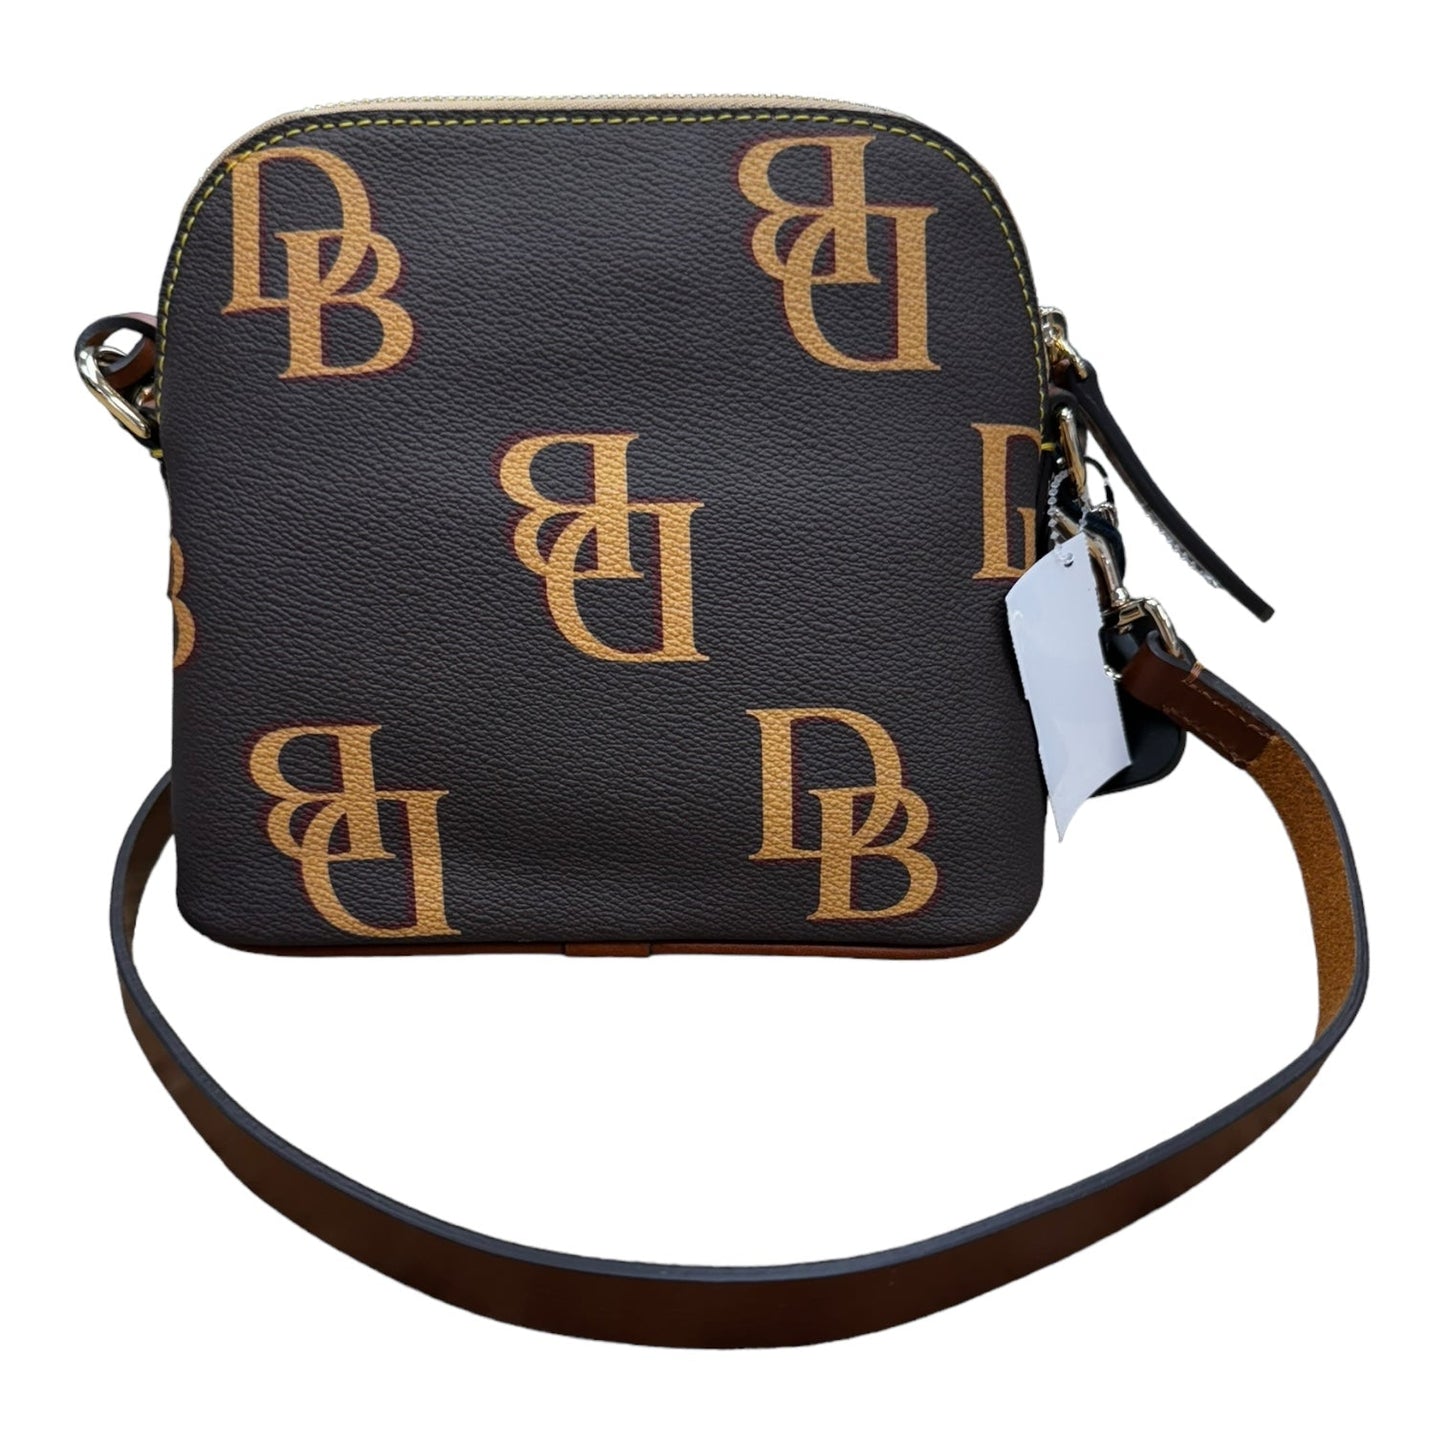 Handbag Designer Dooney And Bourke, Size Small